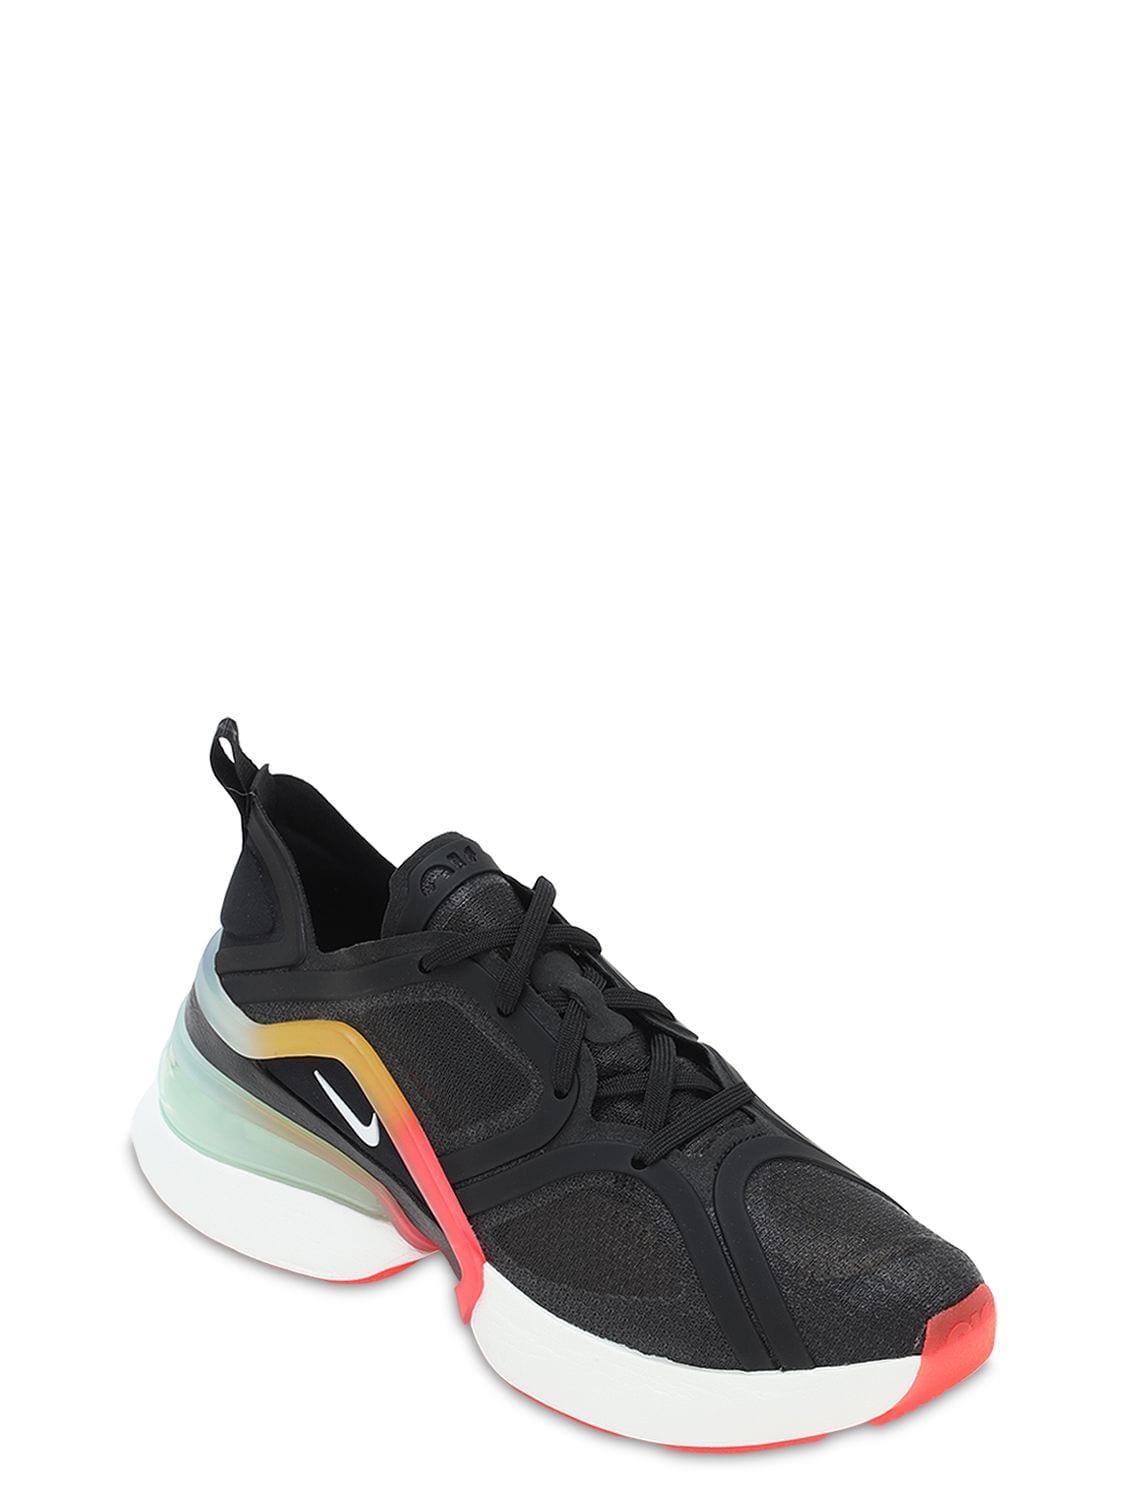 Air Max 270 XX Zapatillas Negro de Nike de color Negro | Lyst